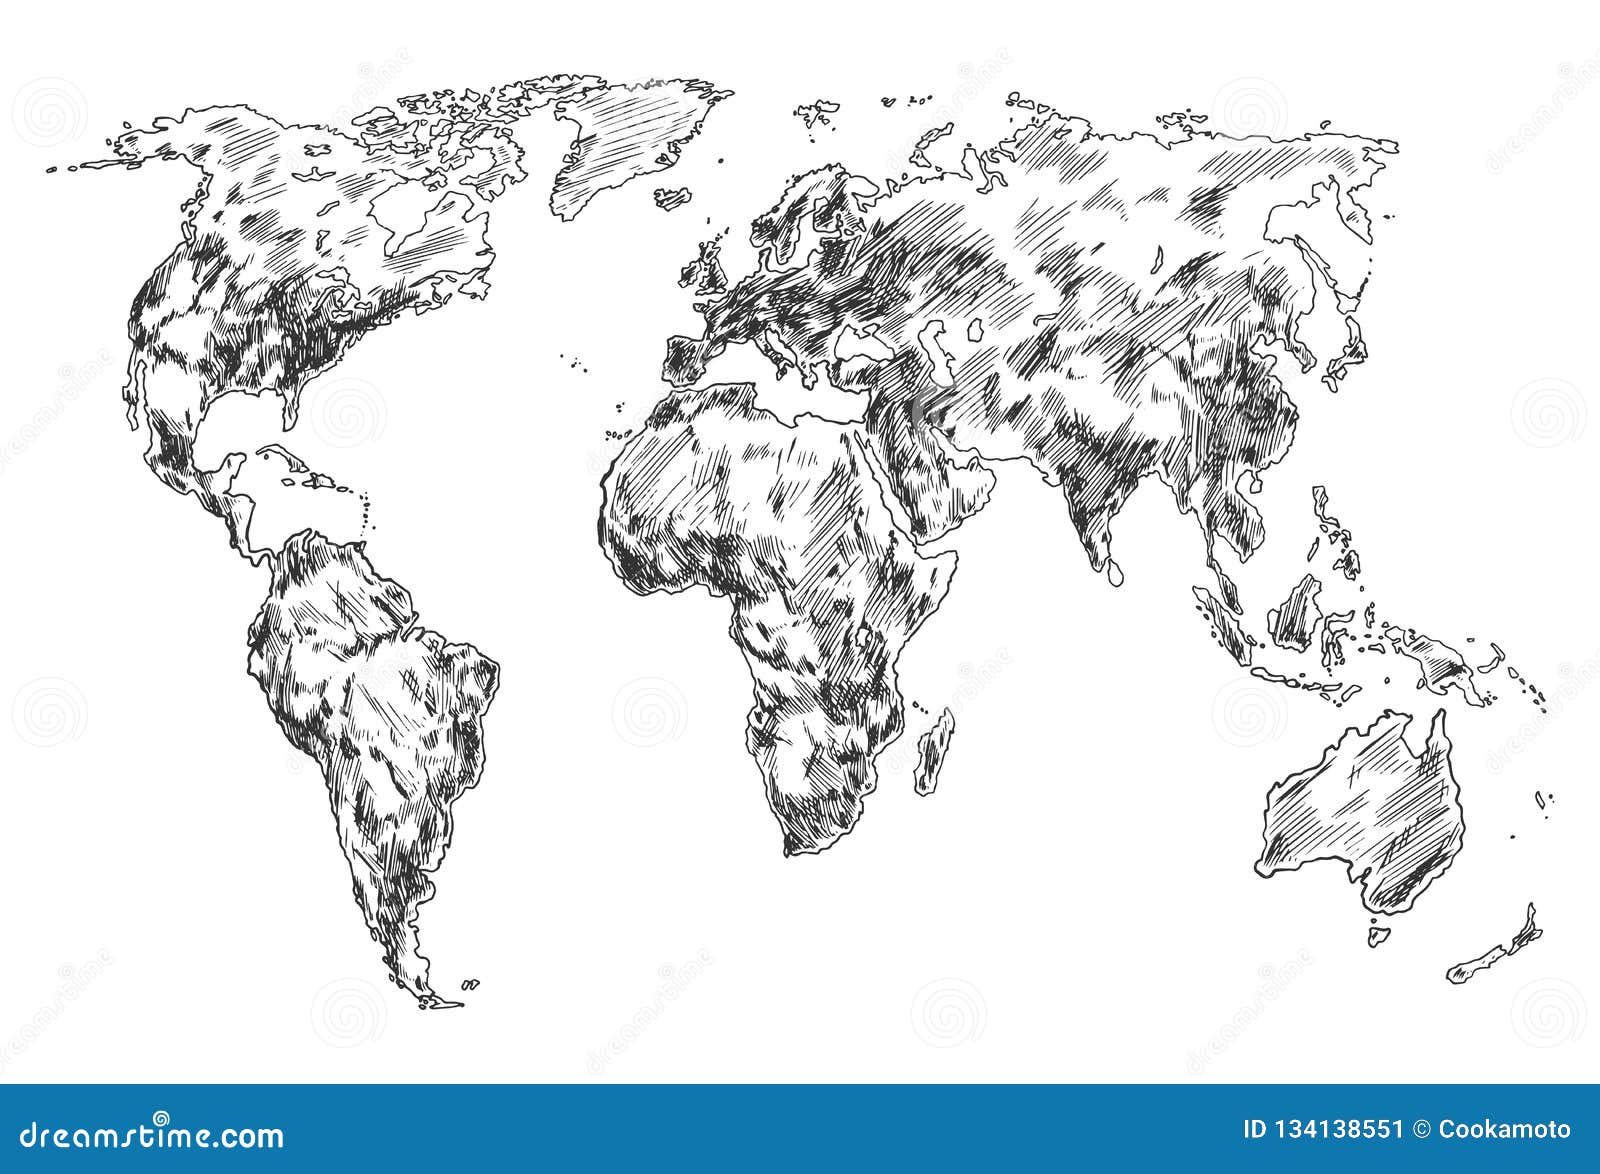 autocad world map drawing dwg-saigonsouth.com.vn